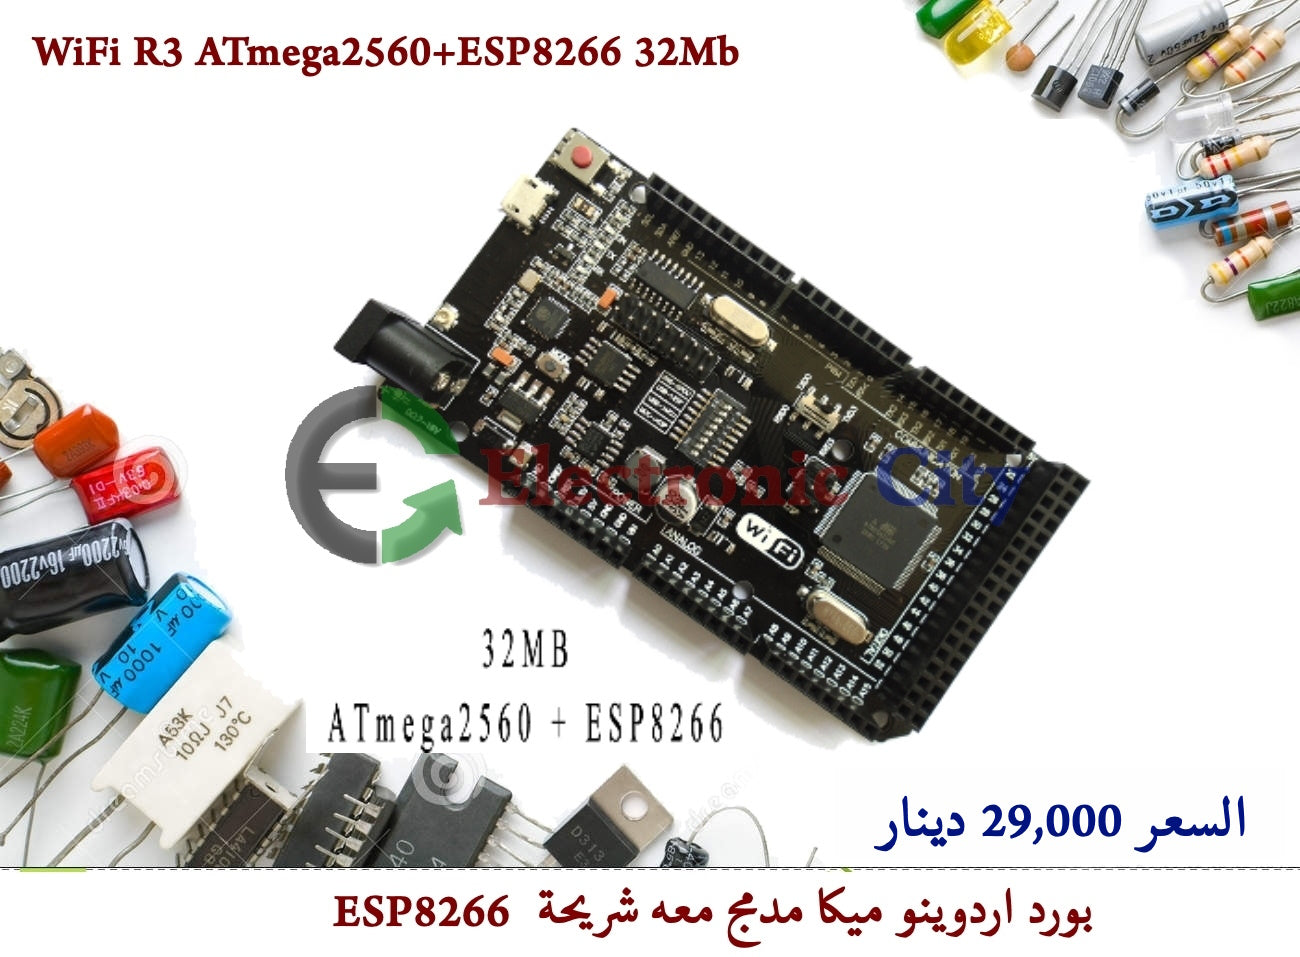 WiFi R3 ATmega2560+ESP8266 32Mb #S6 X13670